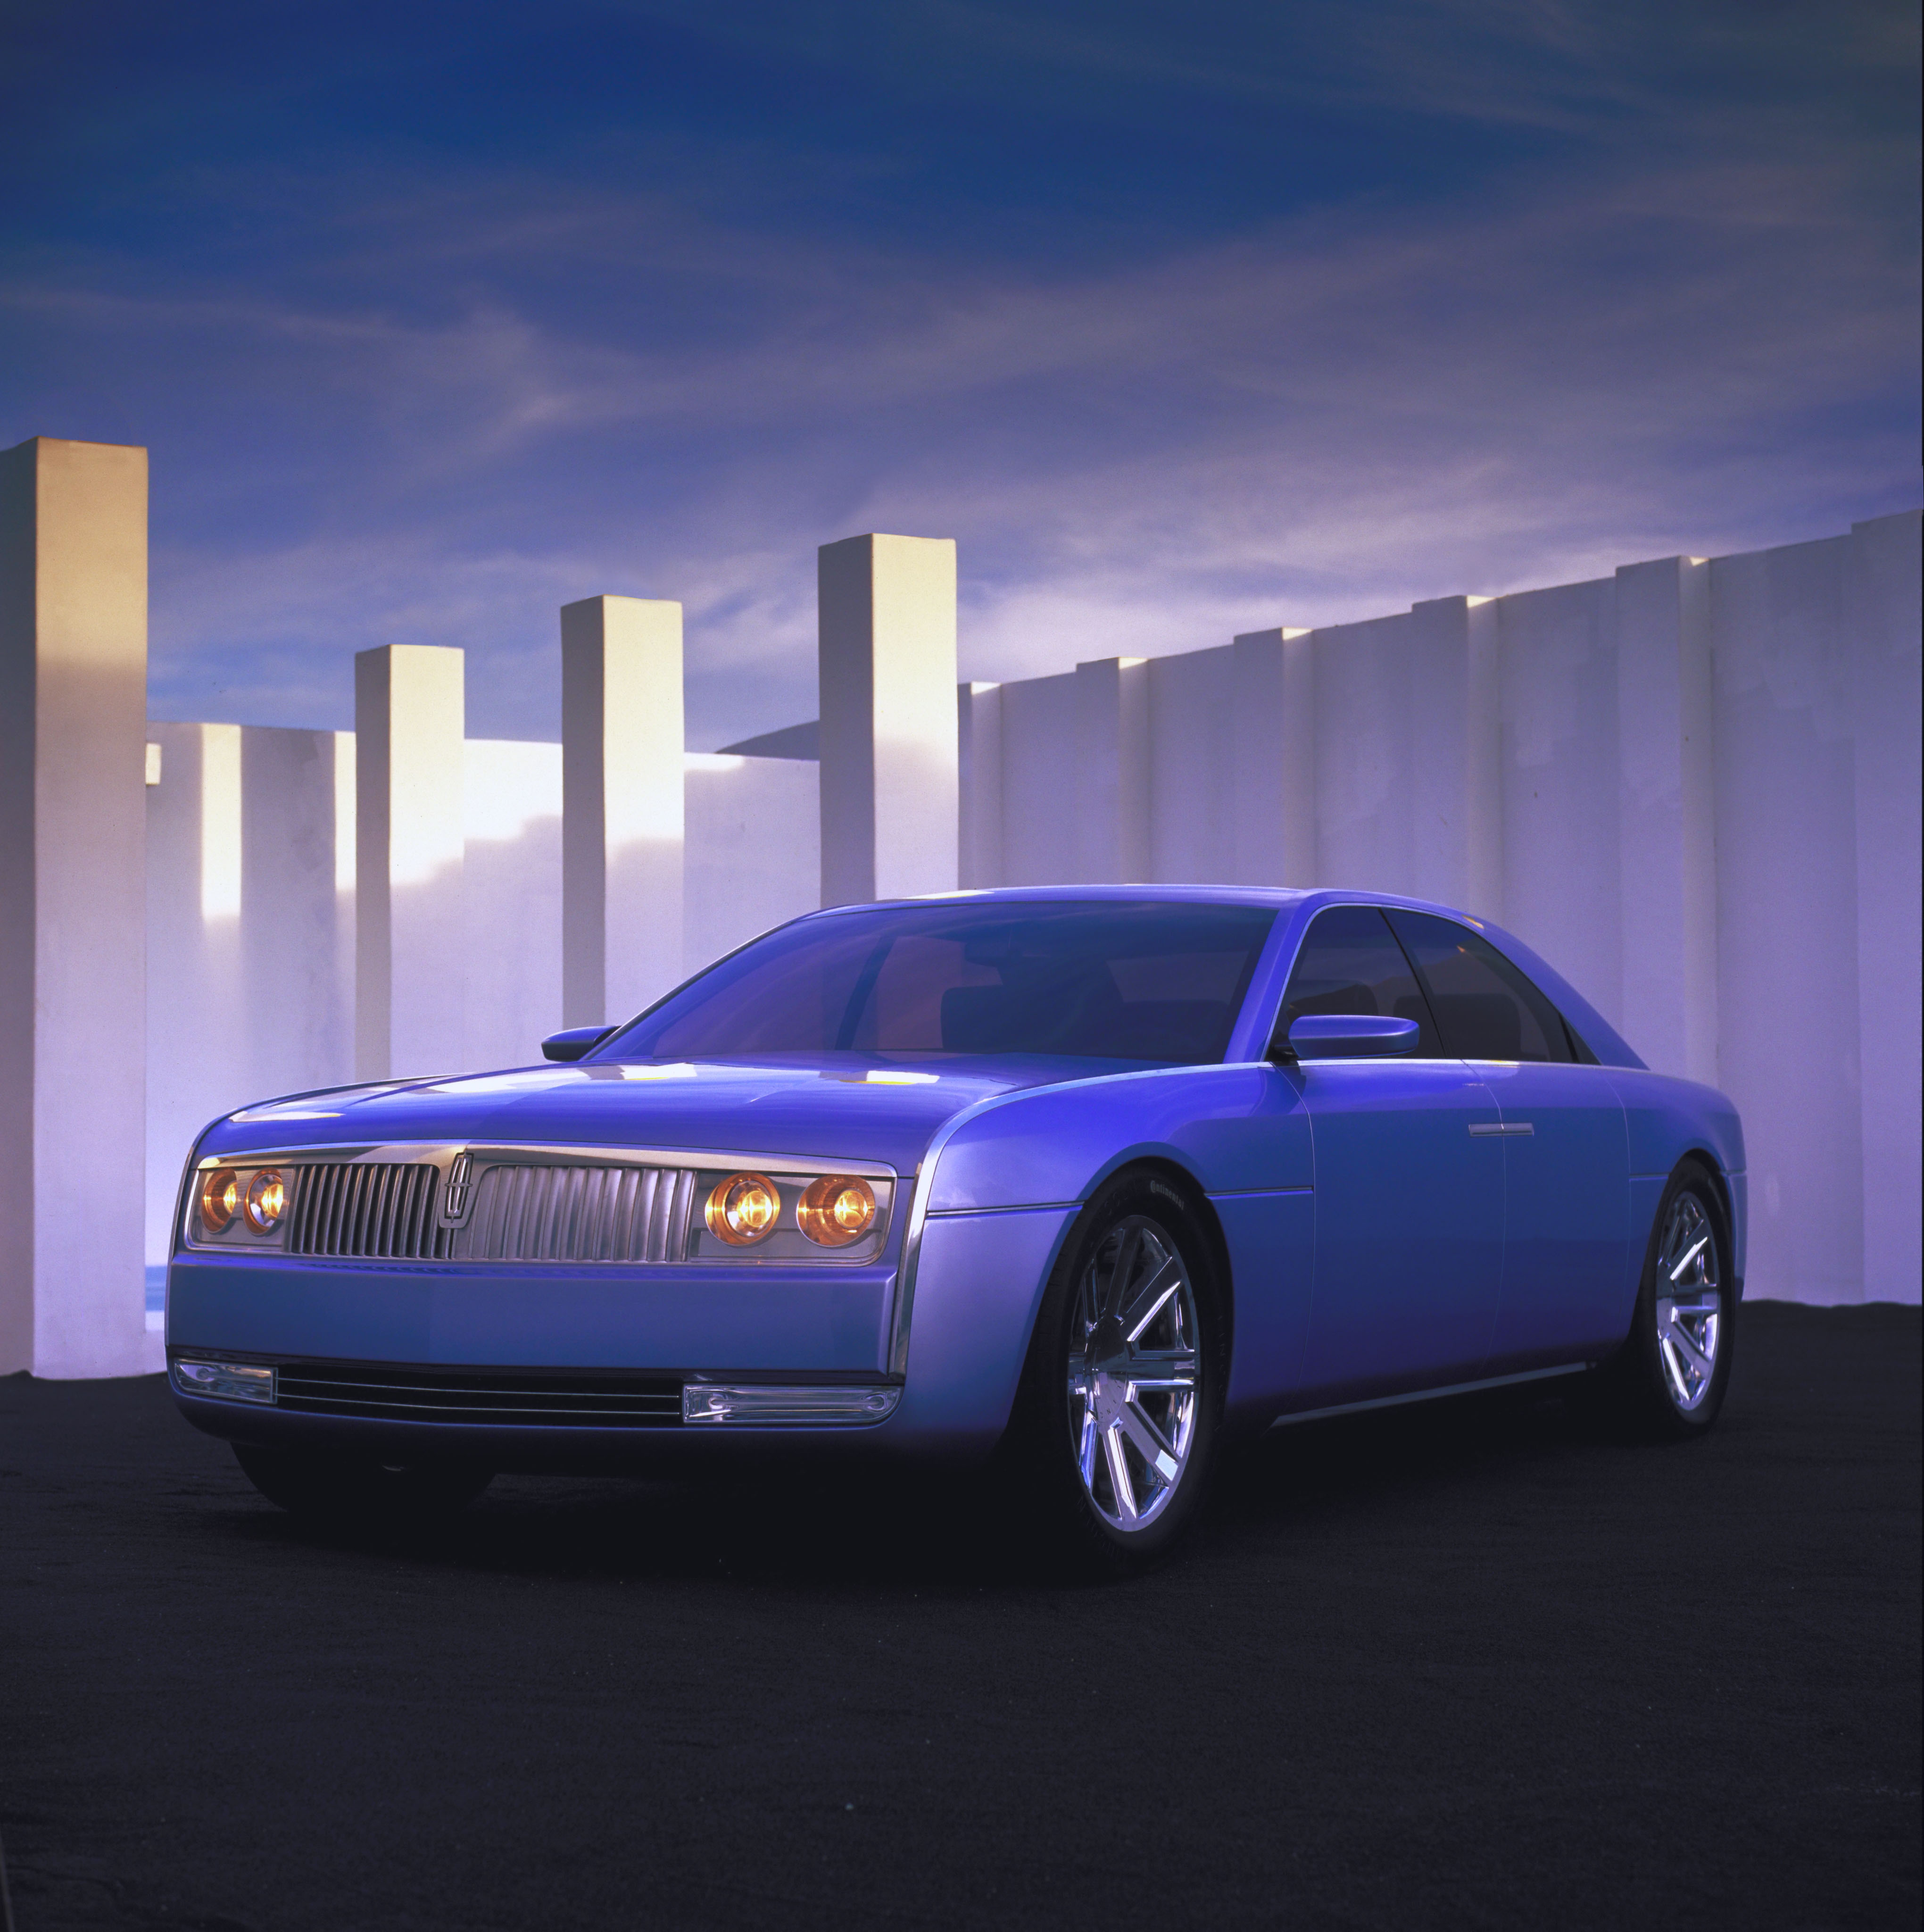 Lincoln Continental Concept